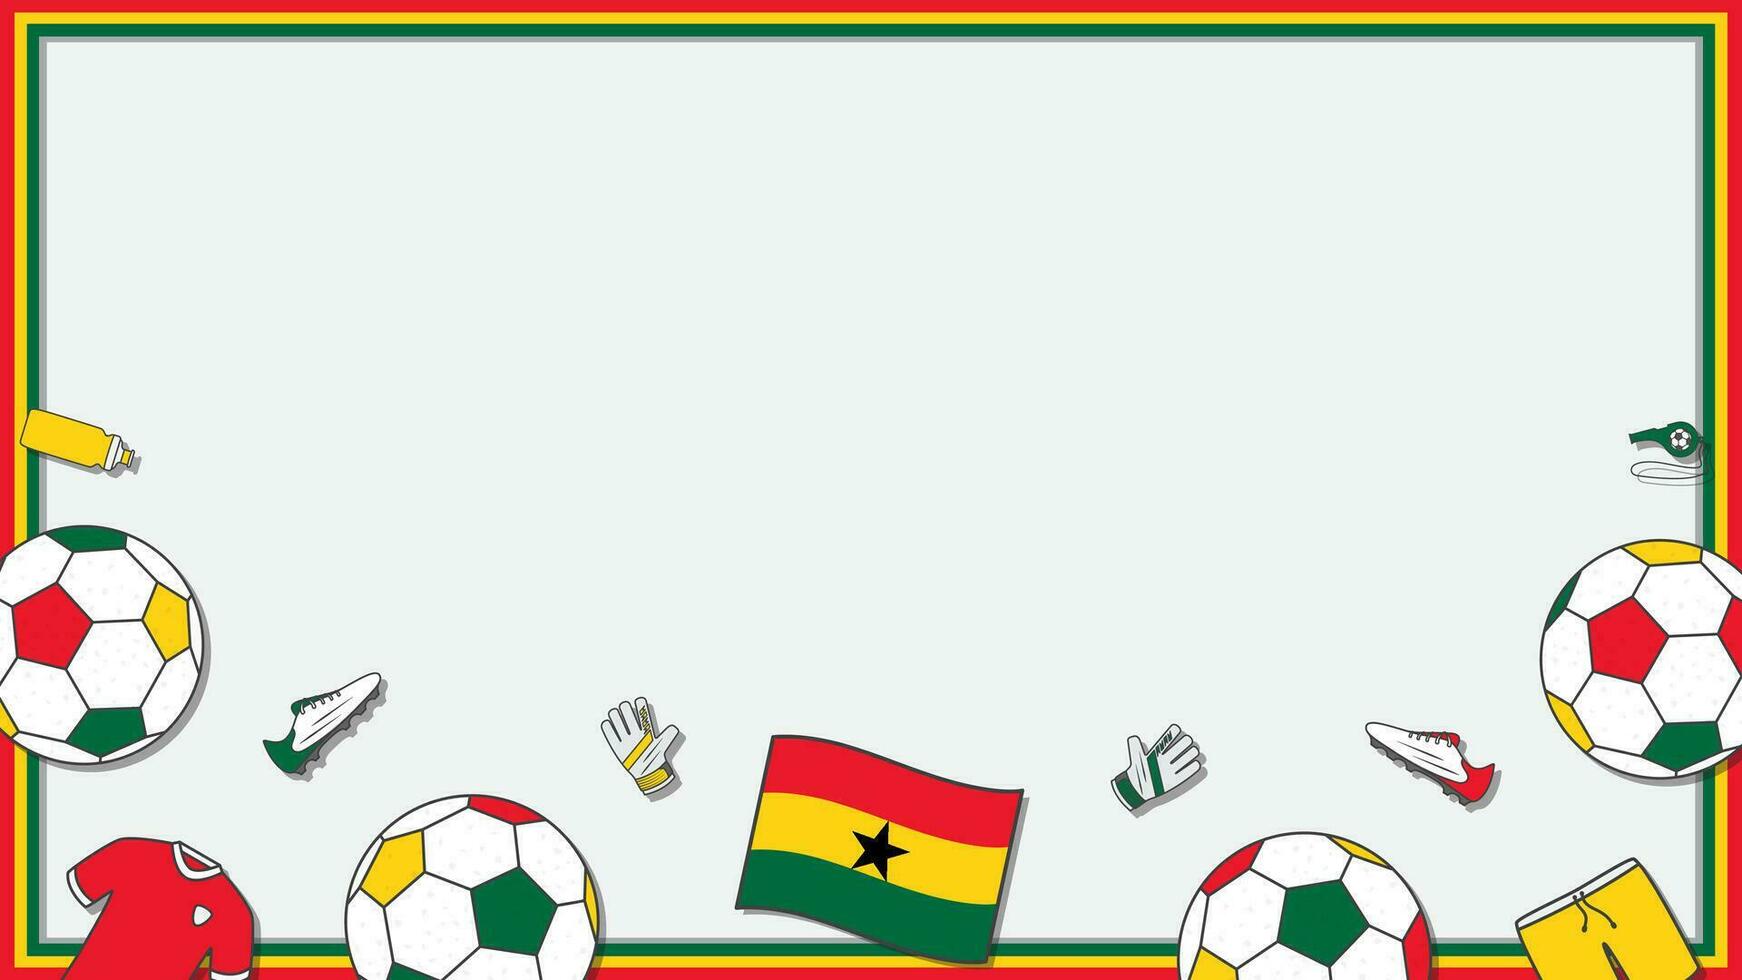 Fußball Hintergrund Design Vorlage. Fußball Karikatur Vektor Illustration. Fußball im Ghana